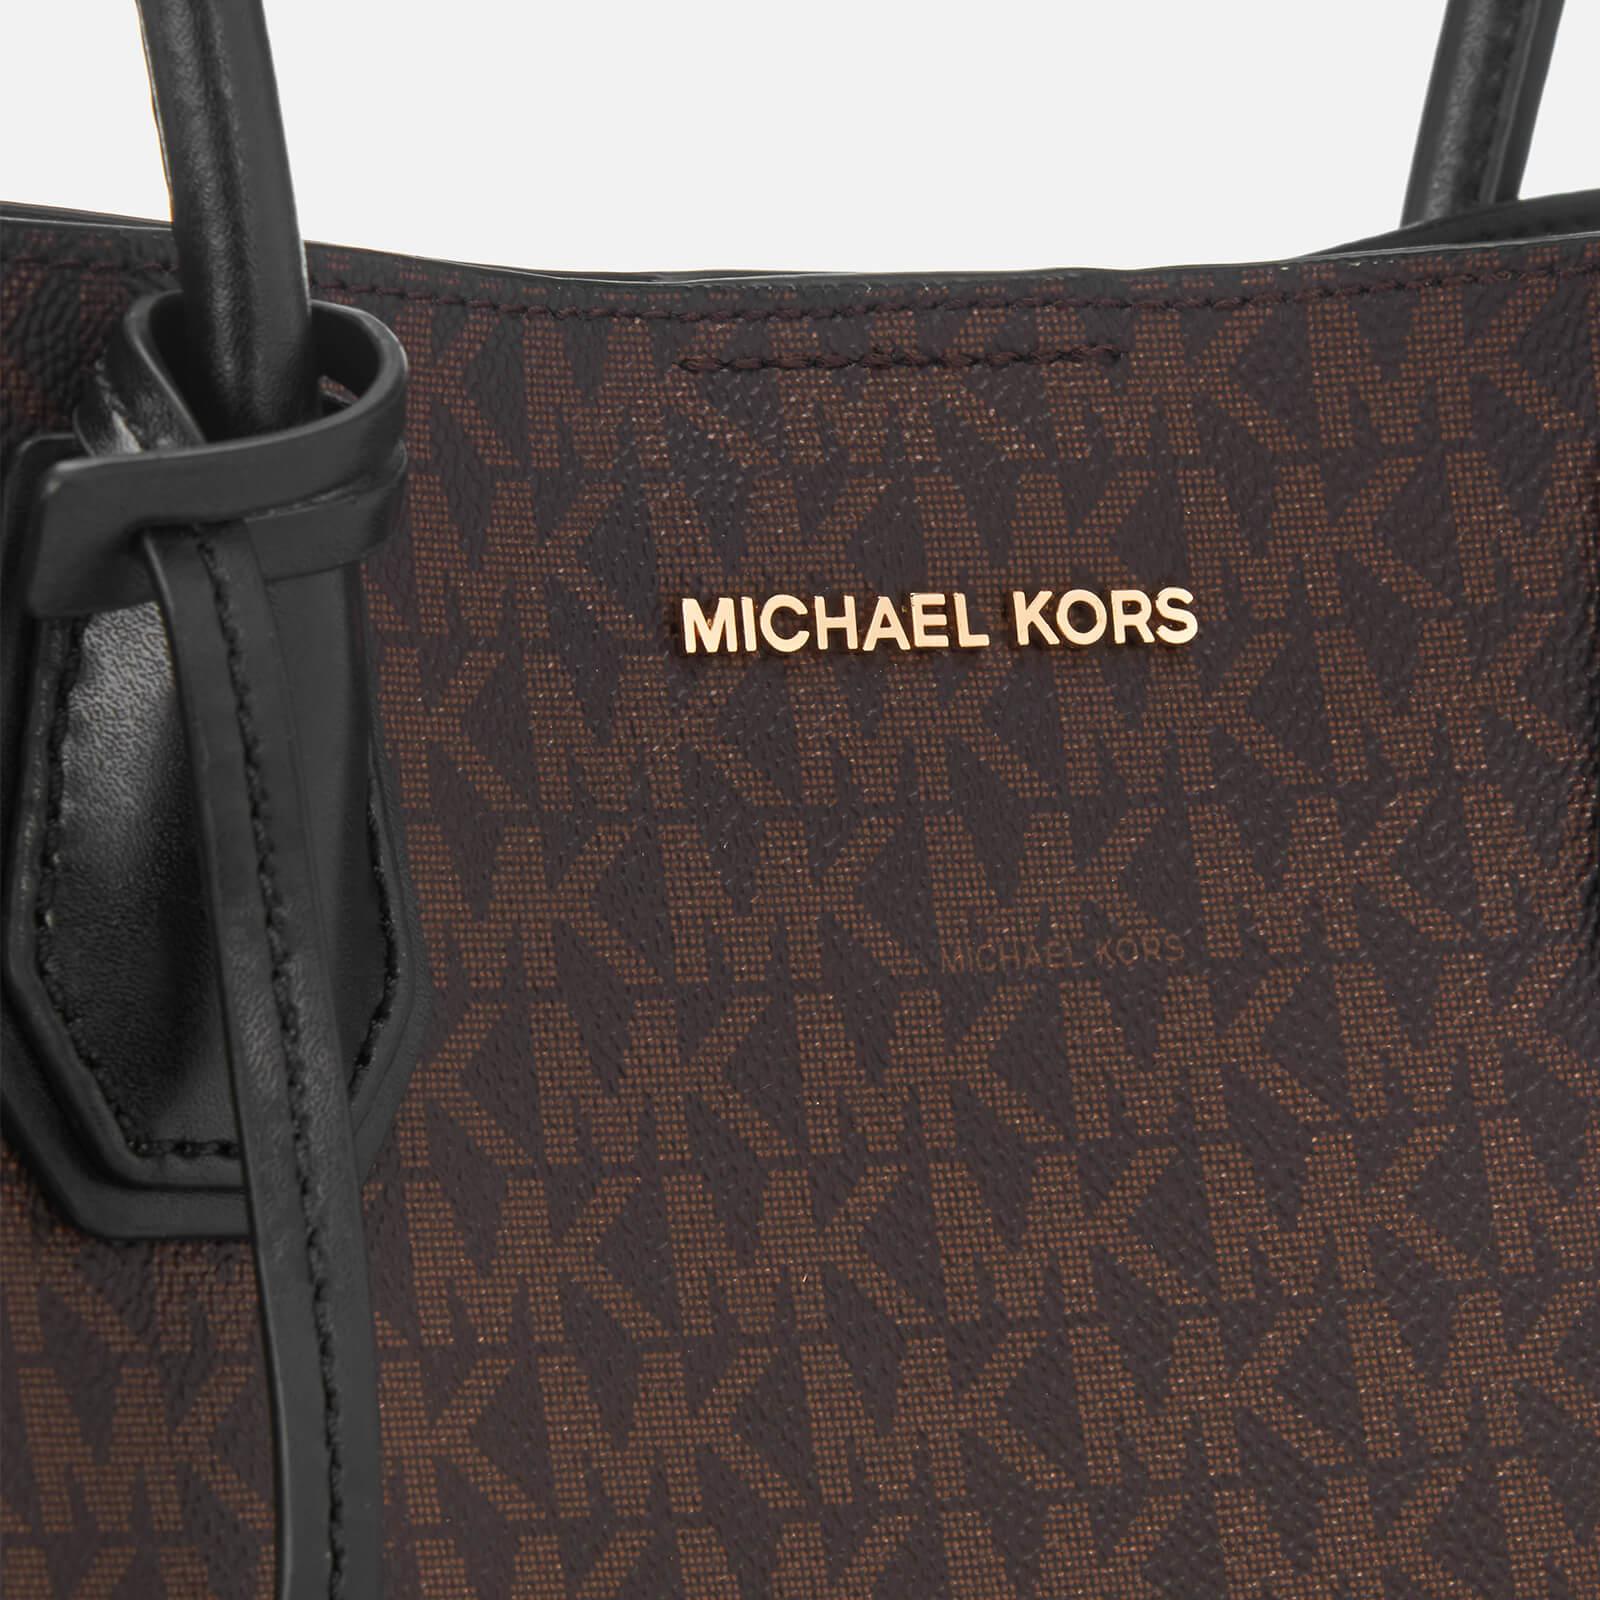 michael kors purse black and brown